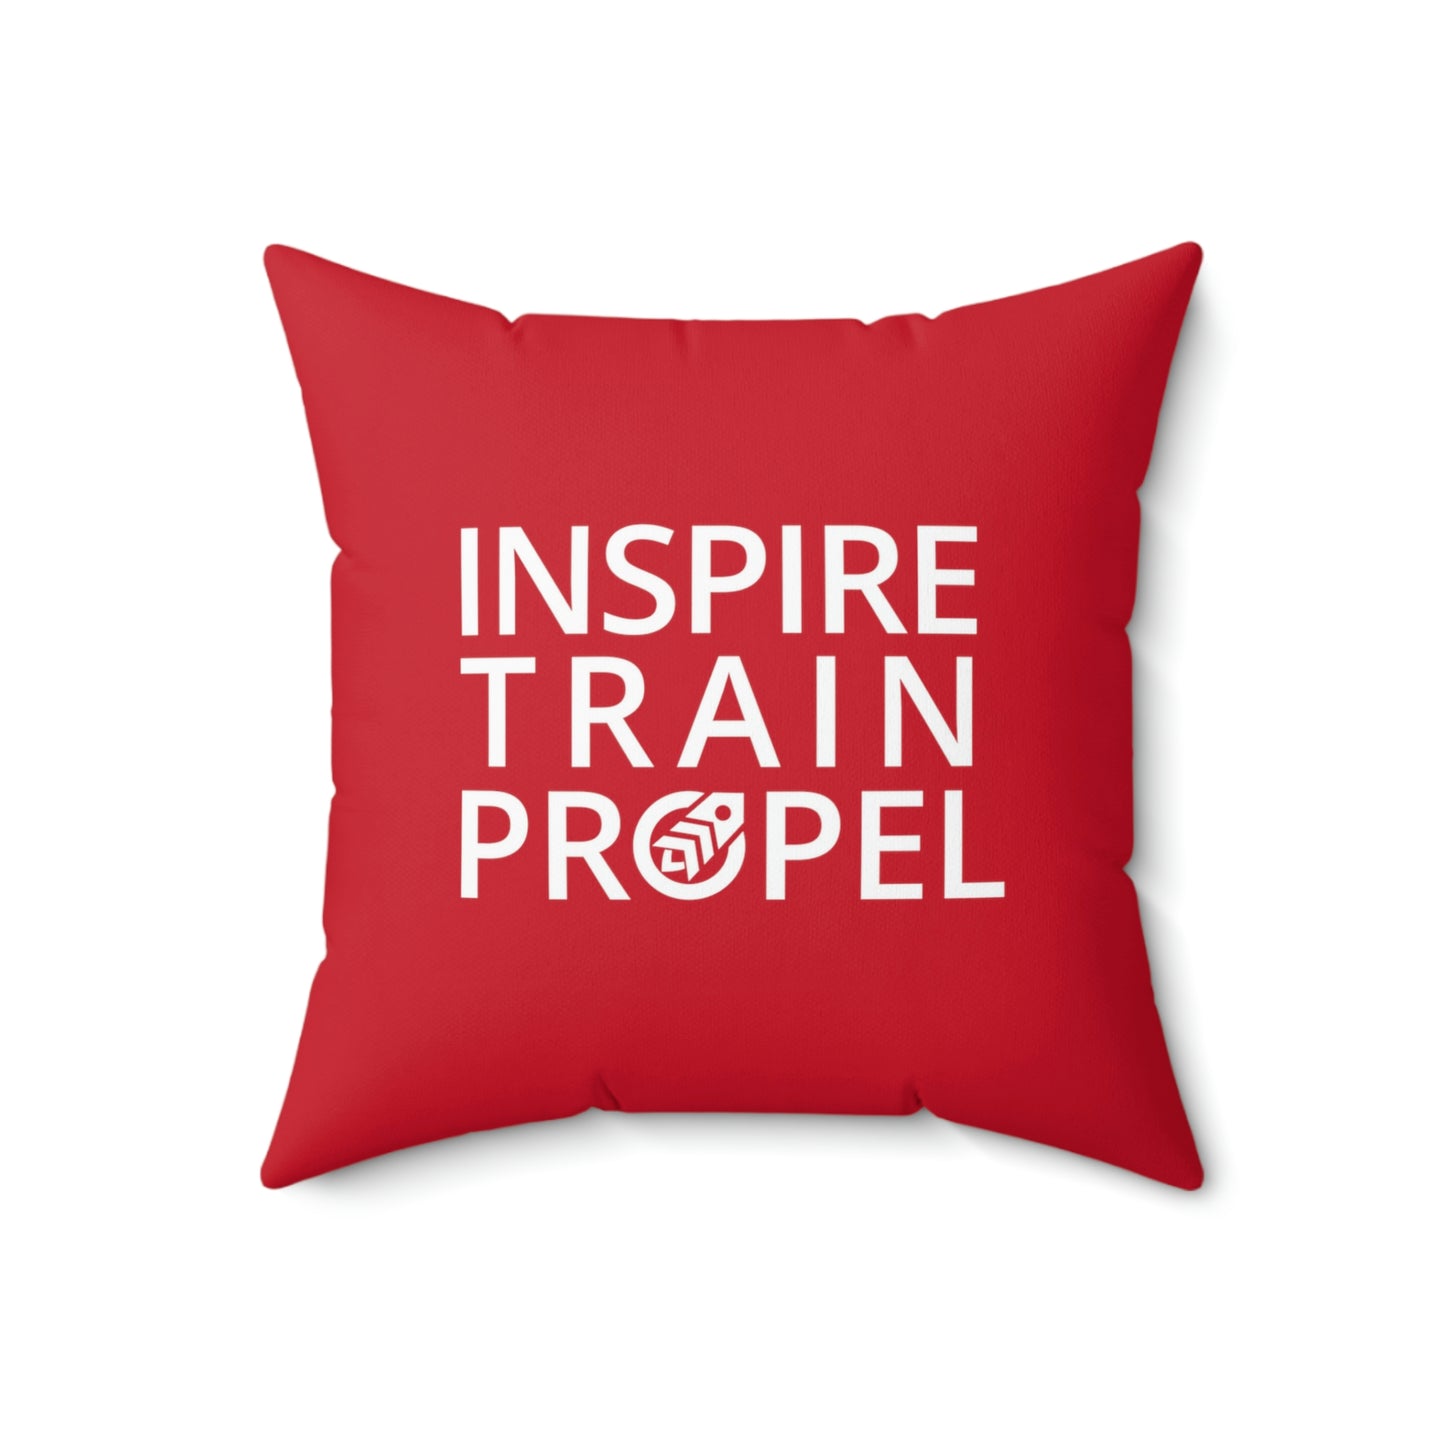 Inspire Train Propel Square Pillow